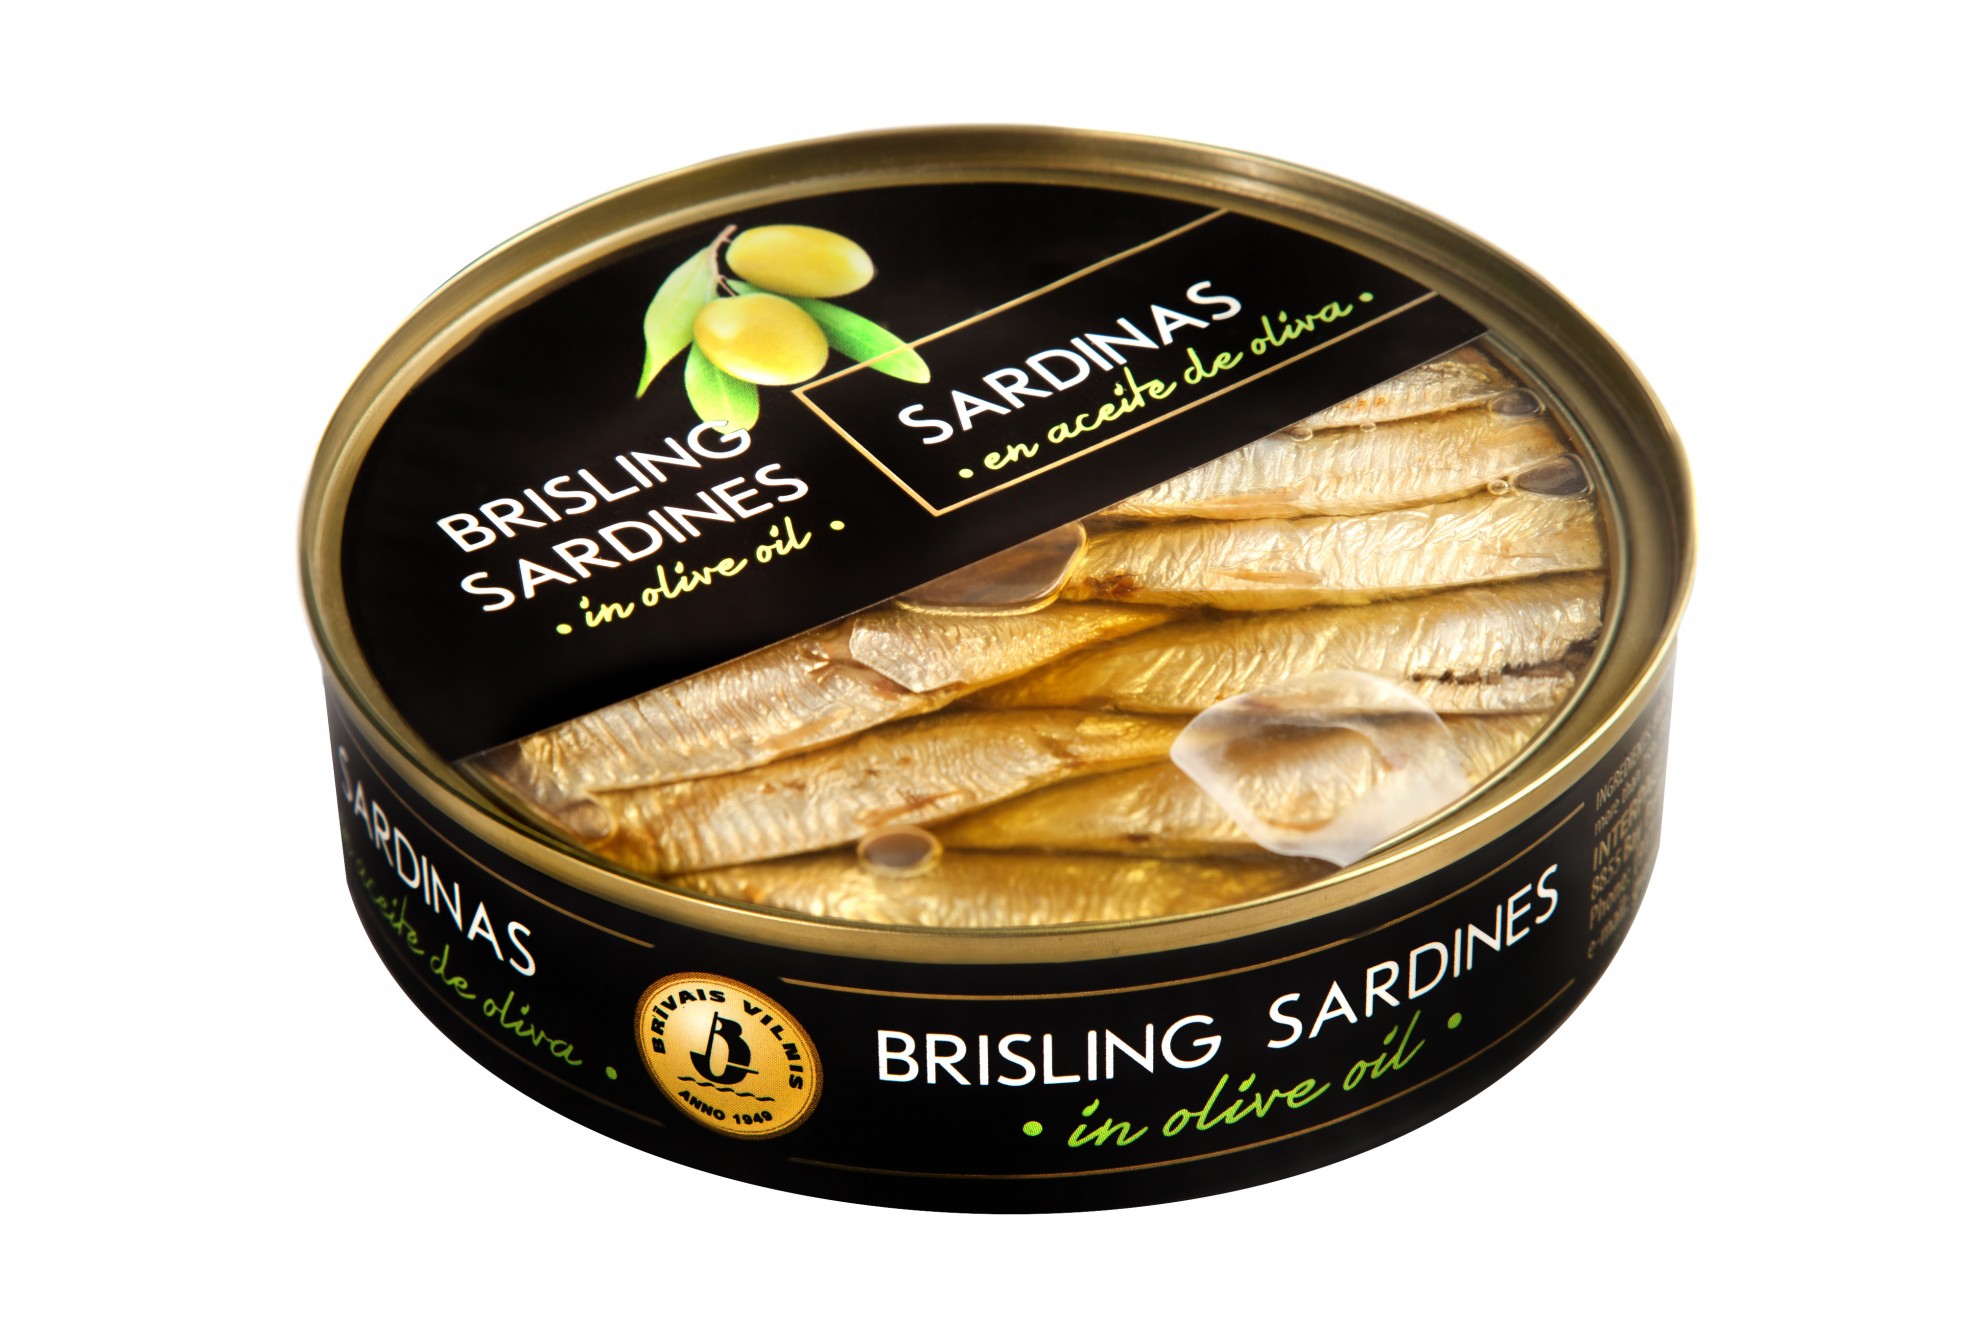 Brisling sardine in ulei masline 160g (eo - plastic lid)